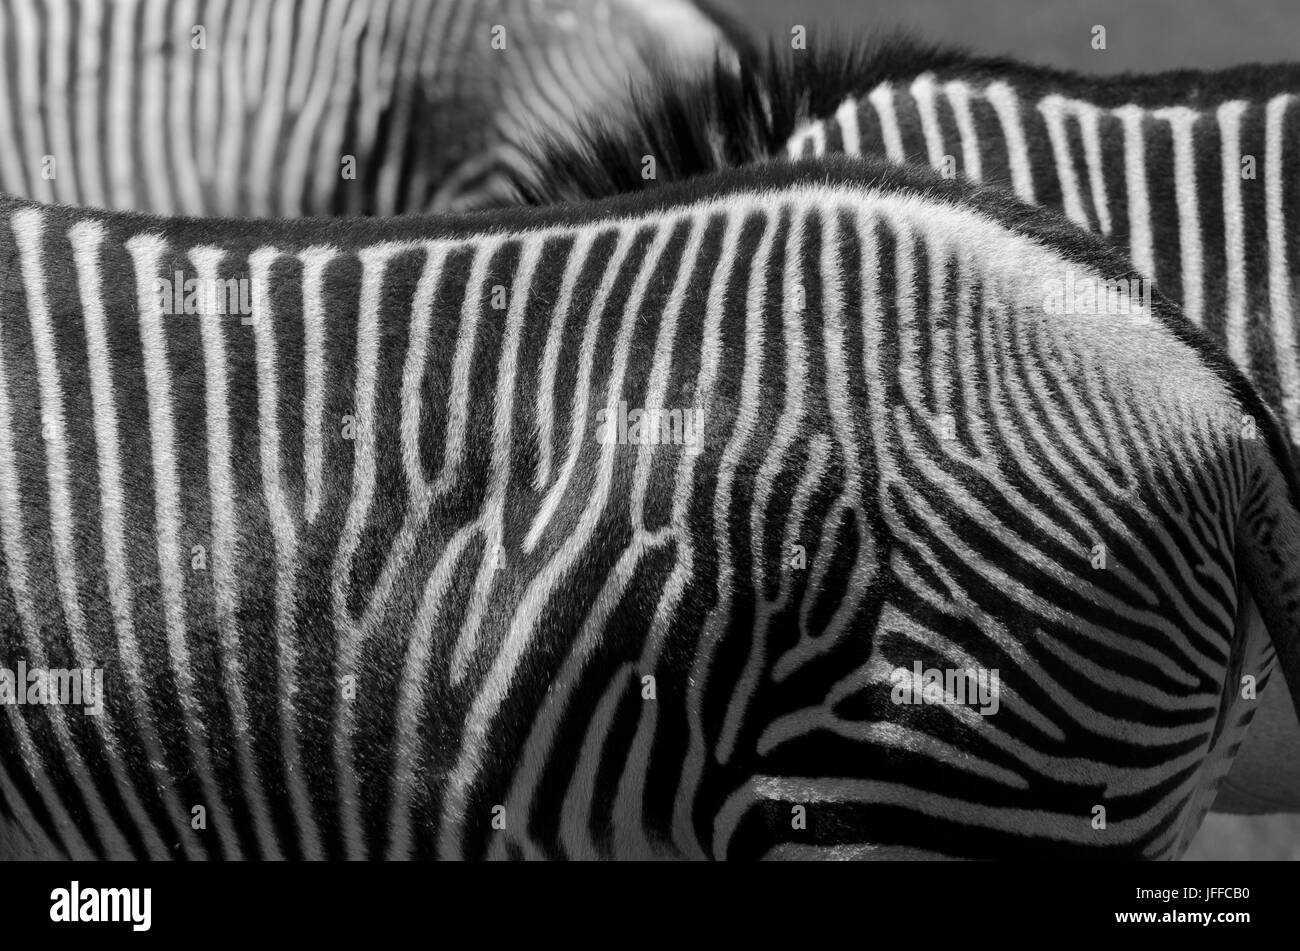 Hartmanns Zebras Weiden Stockfoto